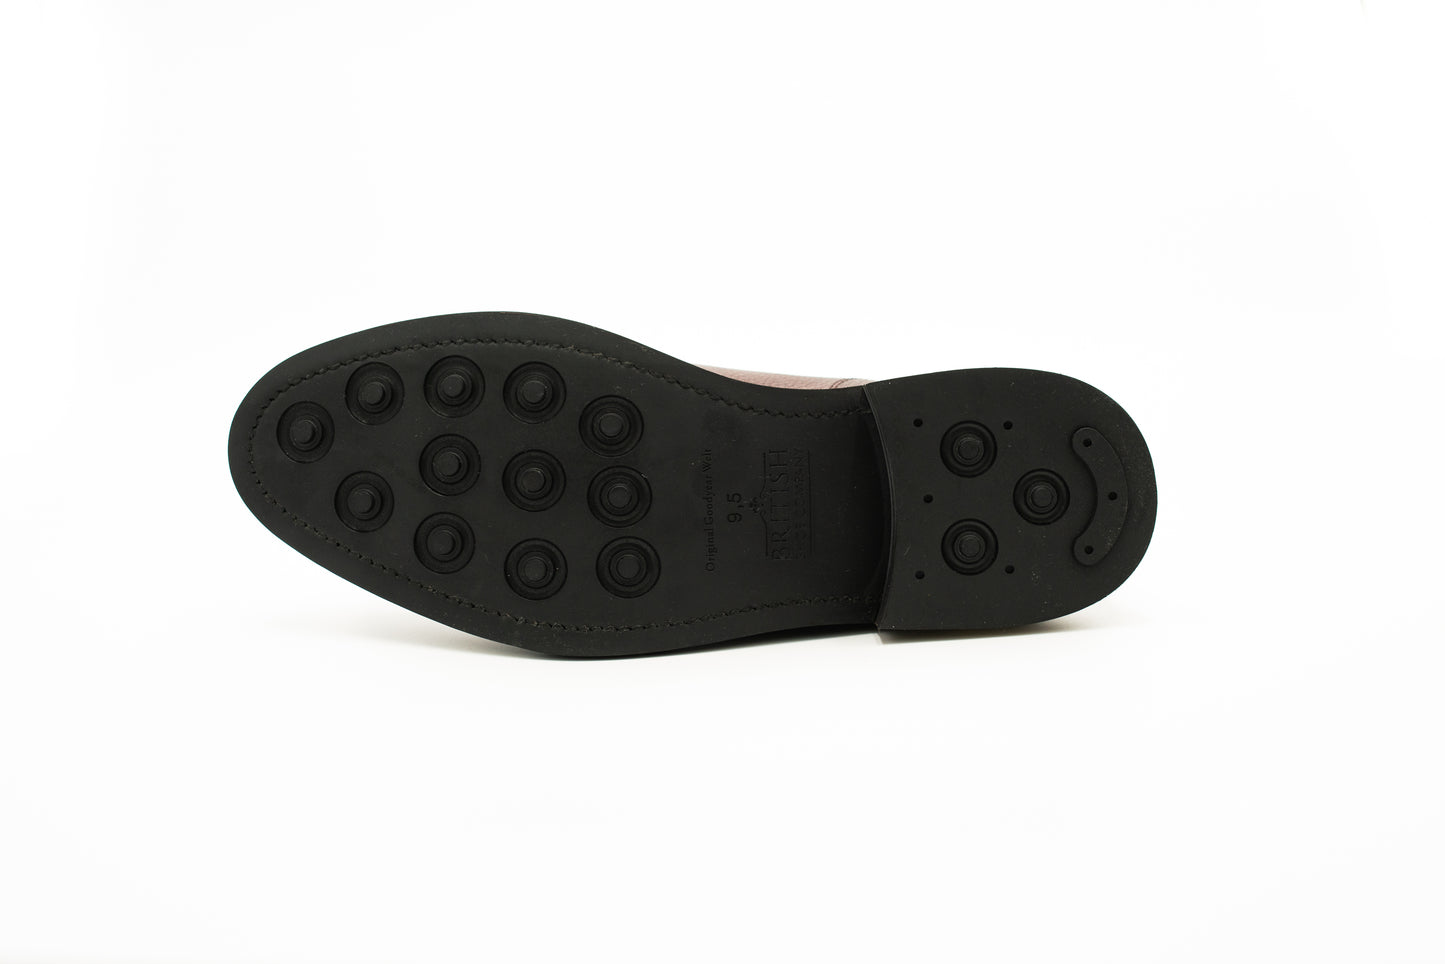 British Shoe Company Men's Wellington Leather Chukka Boot